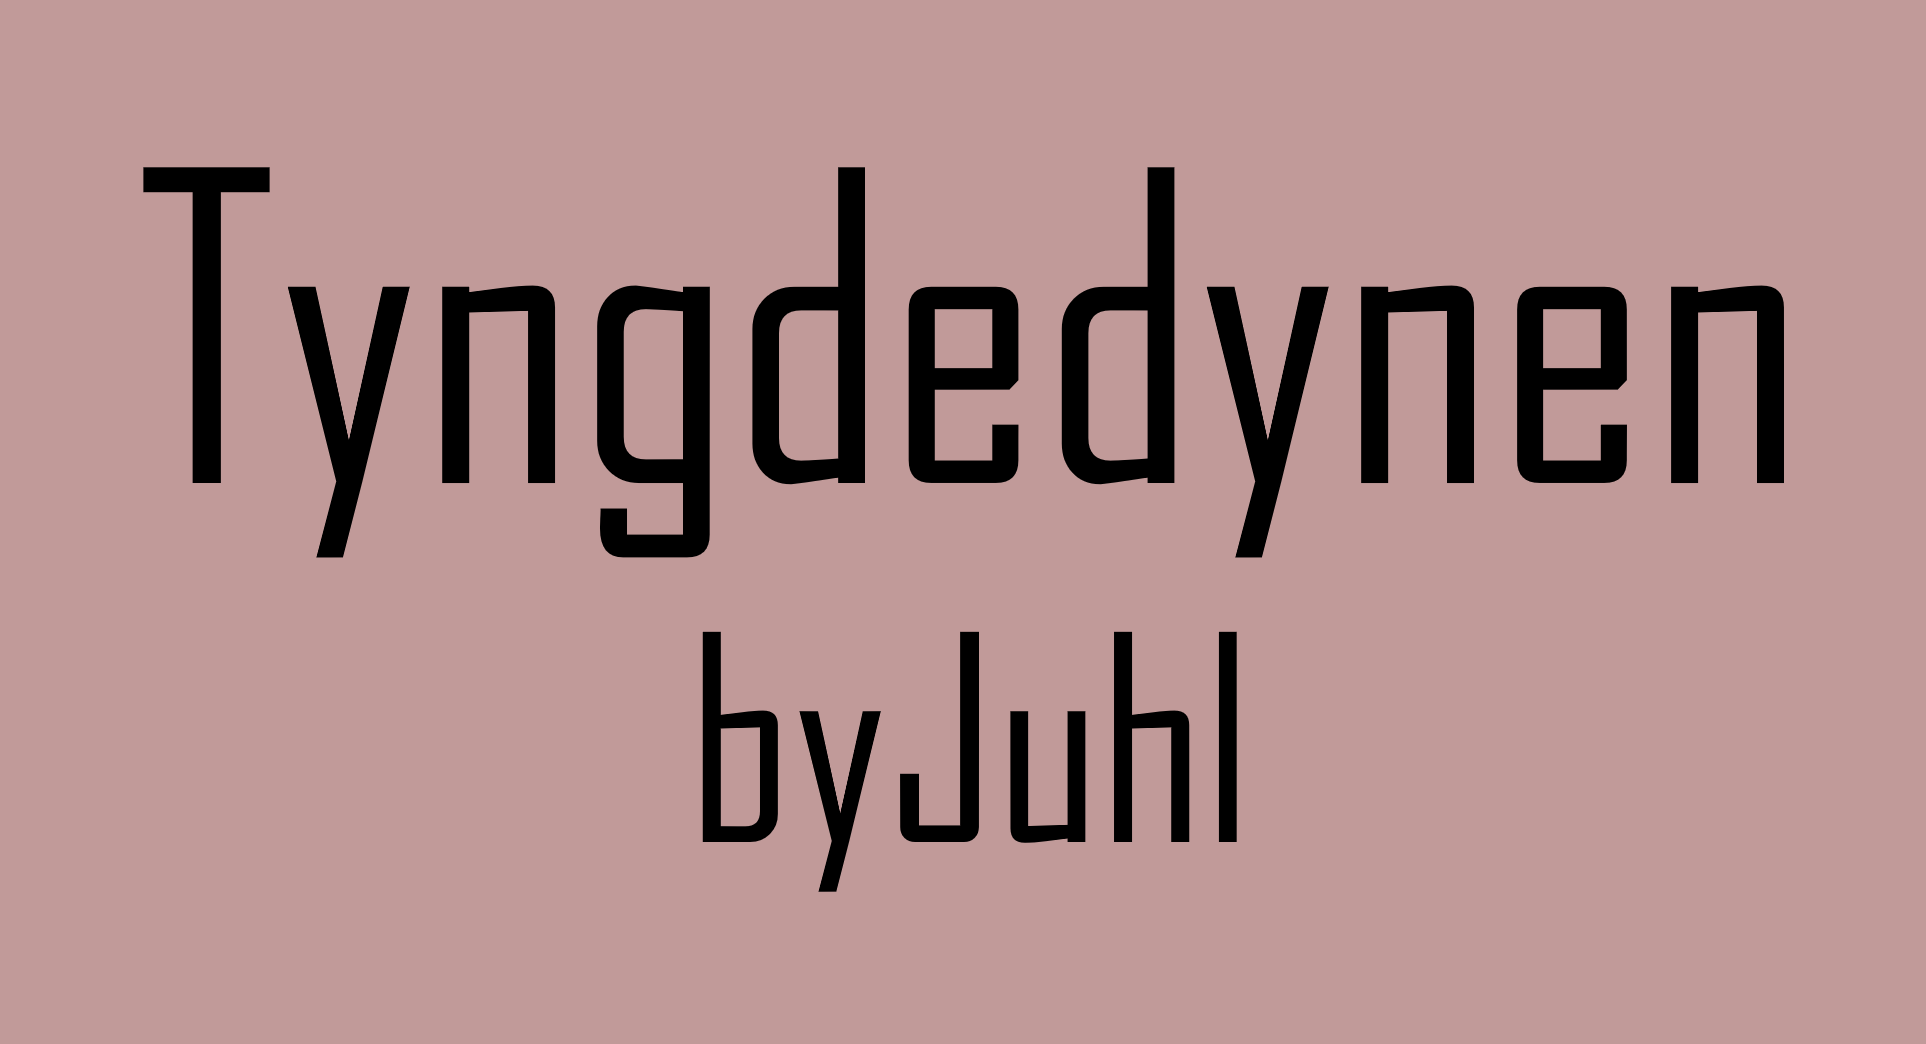 www.TyngdedynenbyJuhl.dk